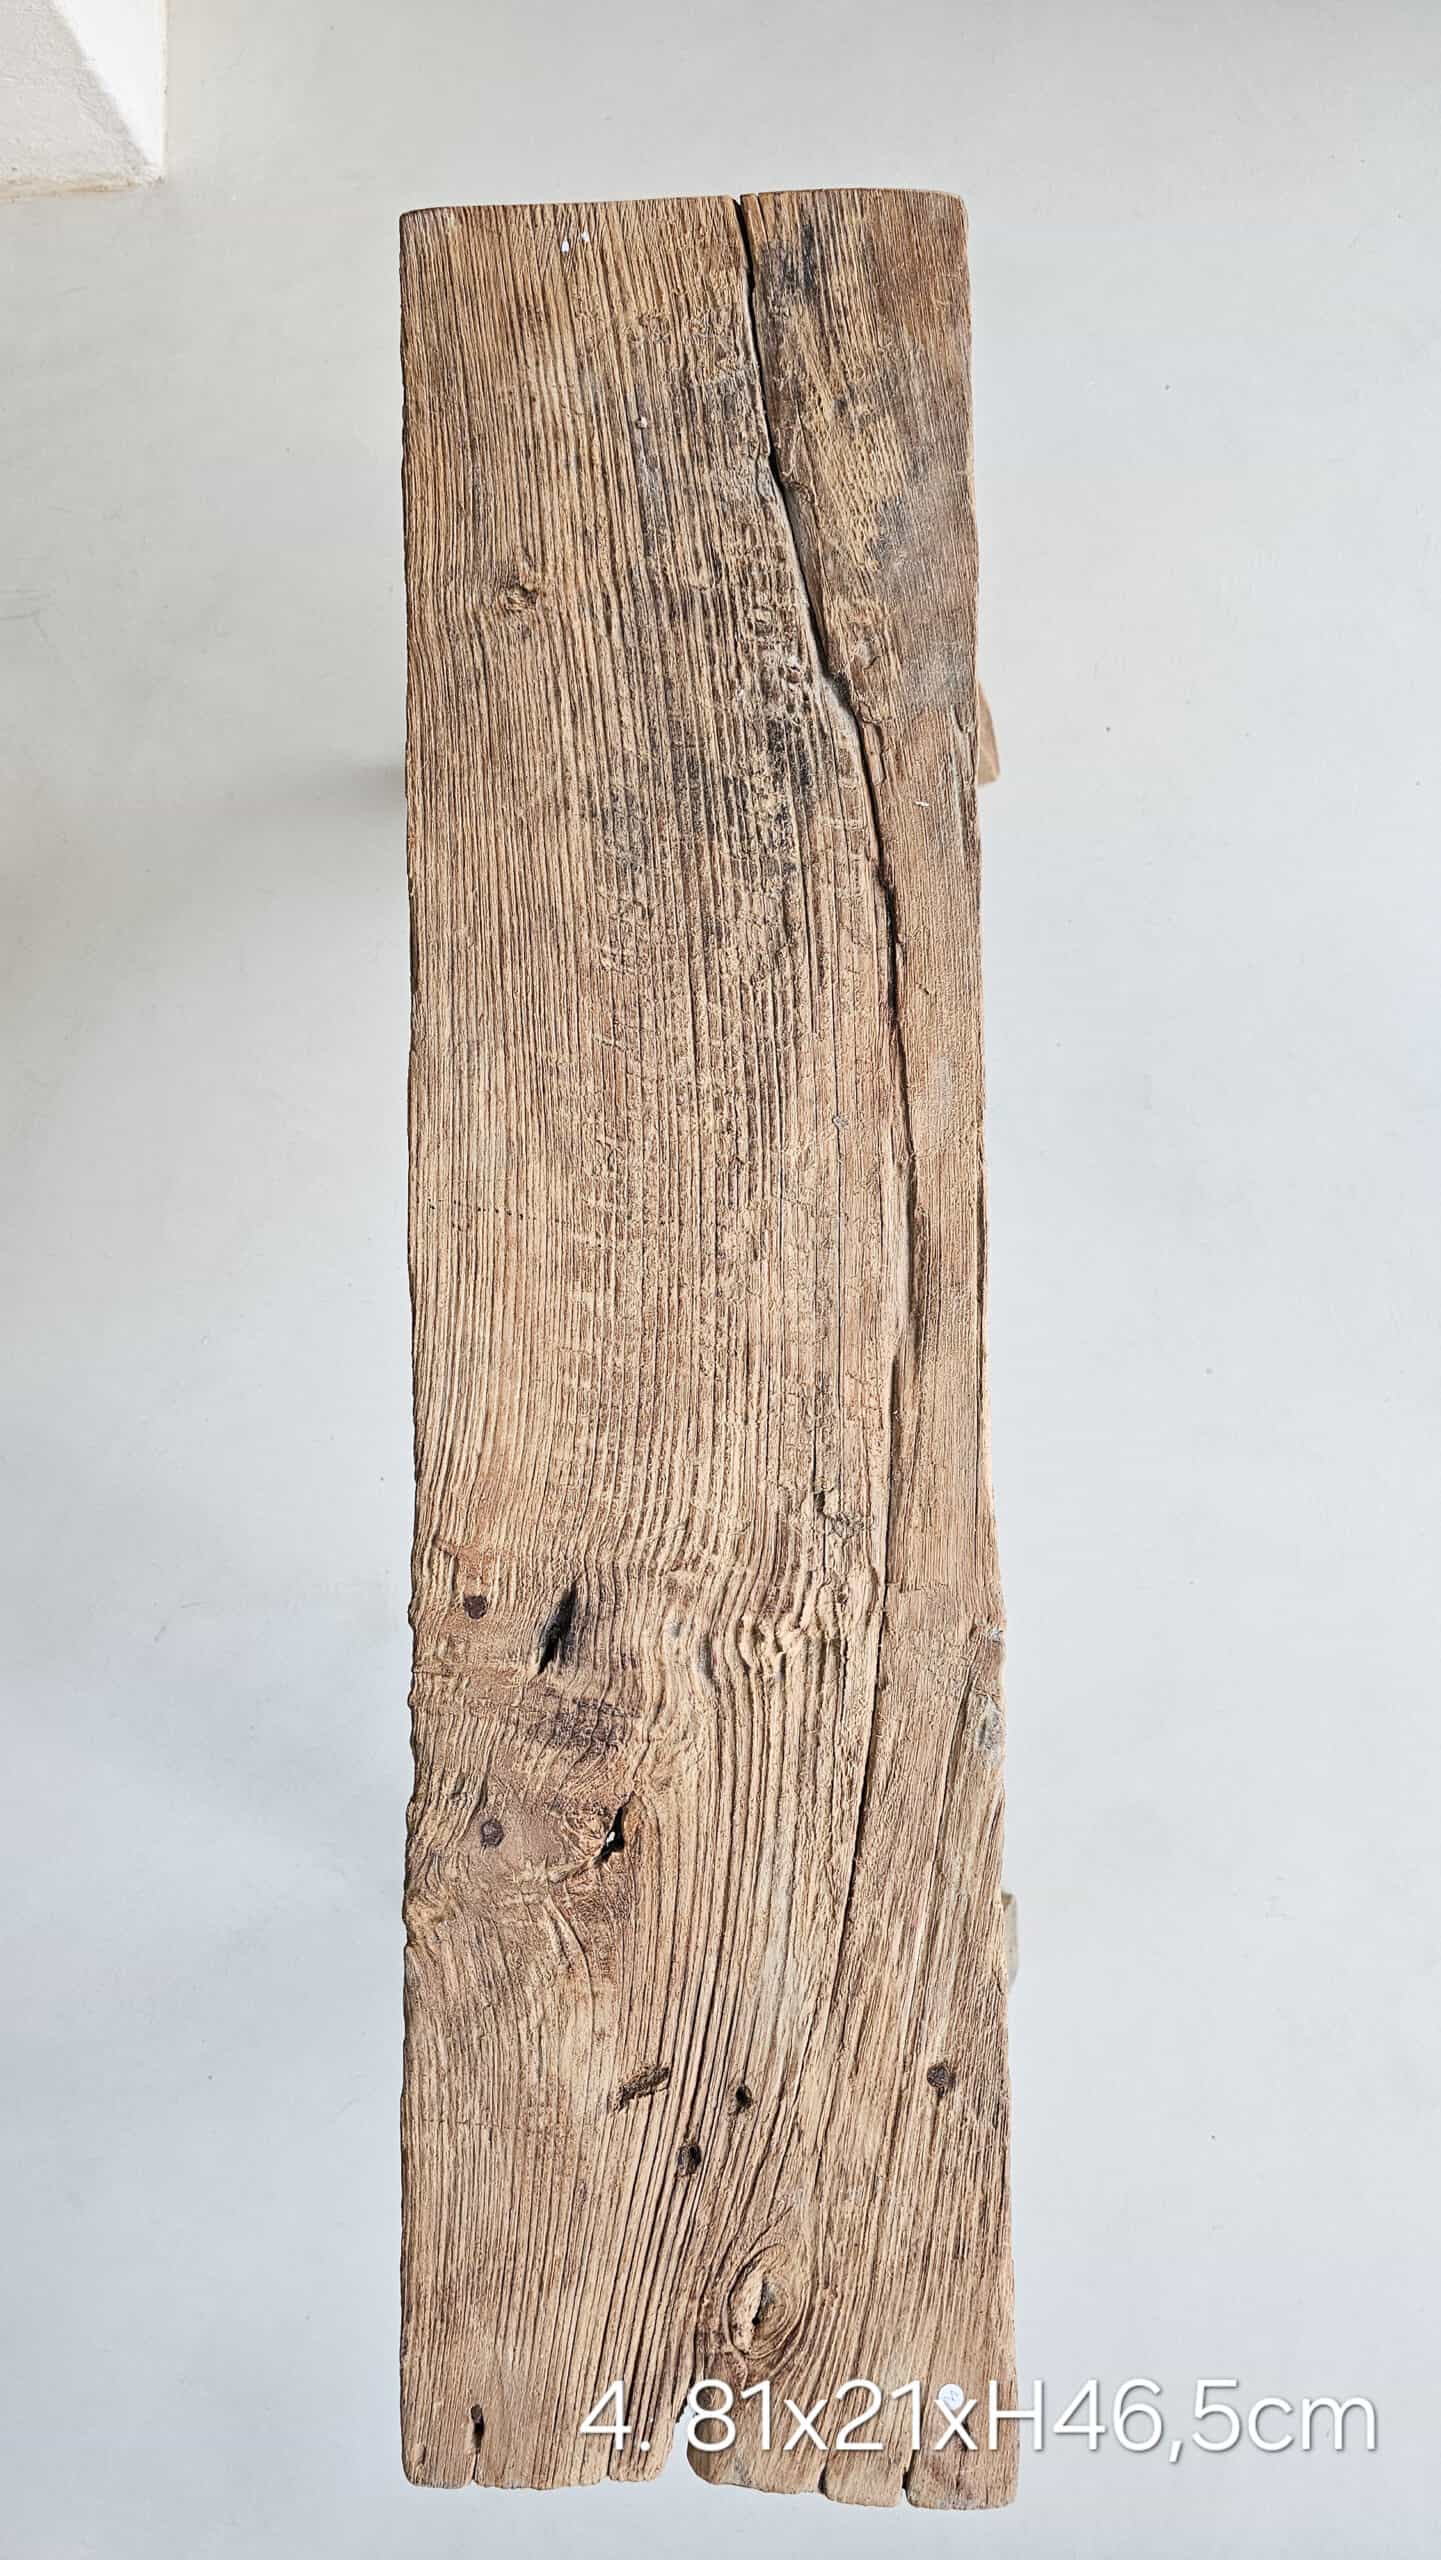 Gracia Rustic Wooden Bench - Earthy Charm